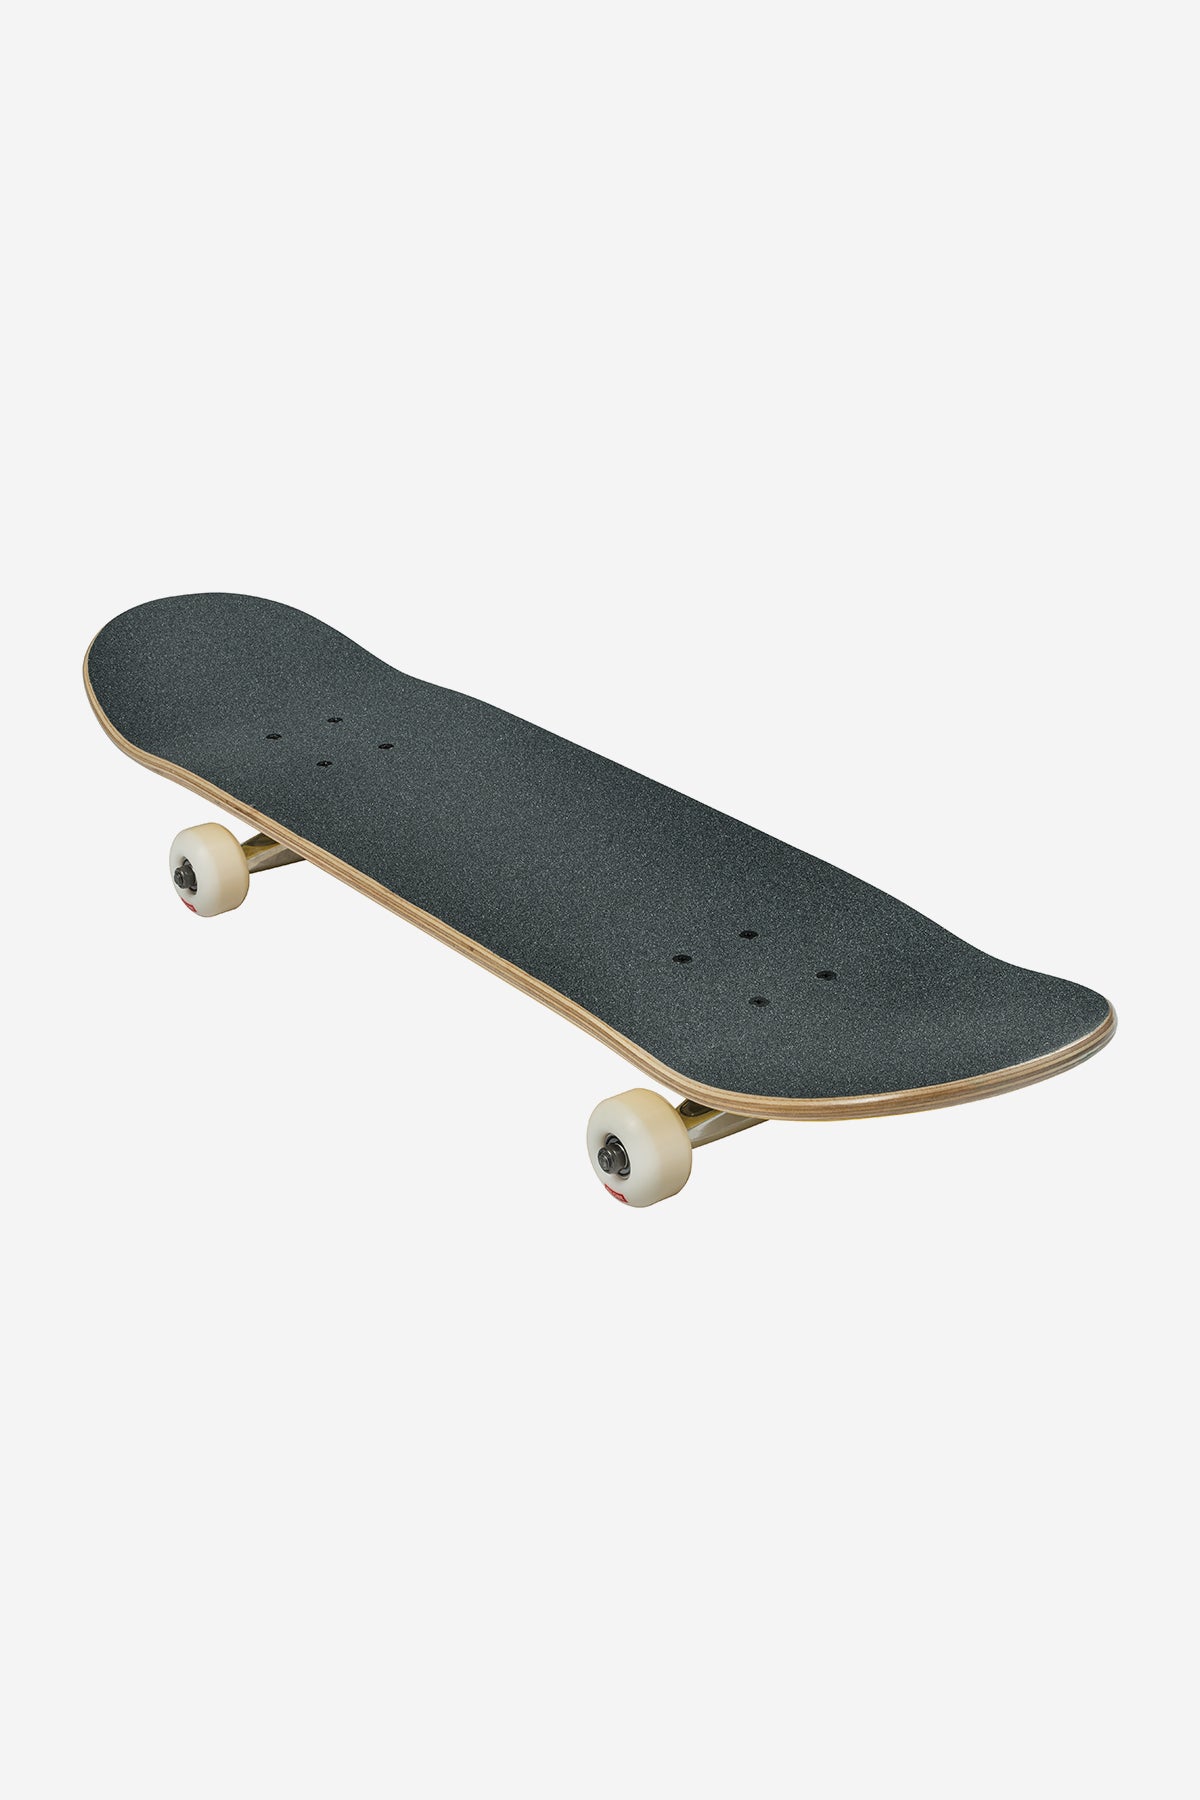 Globe - Goodstock - Zwart - 8.125" Compleet Skateboard